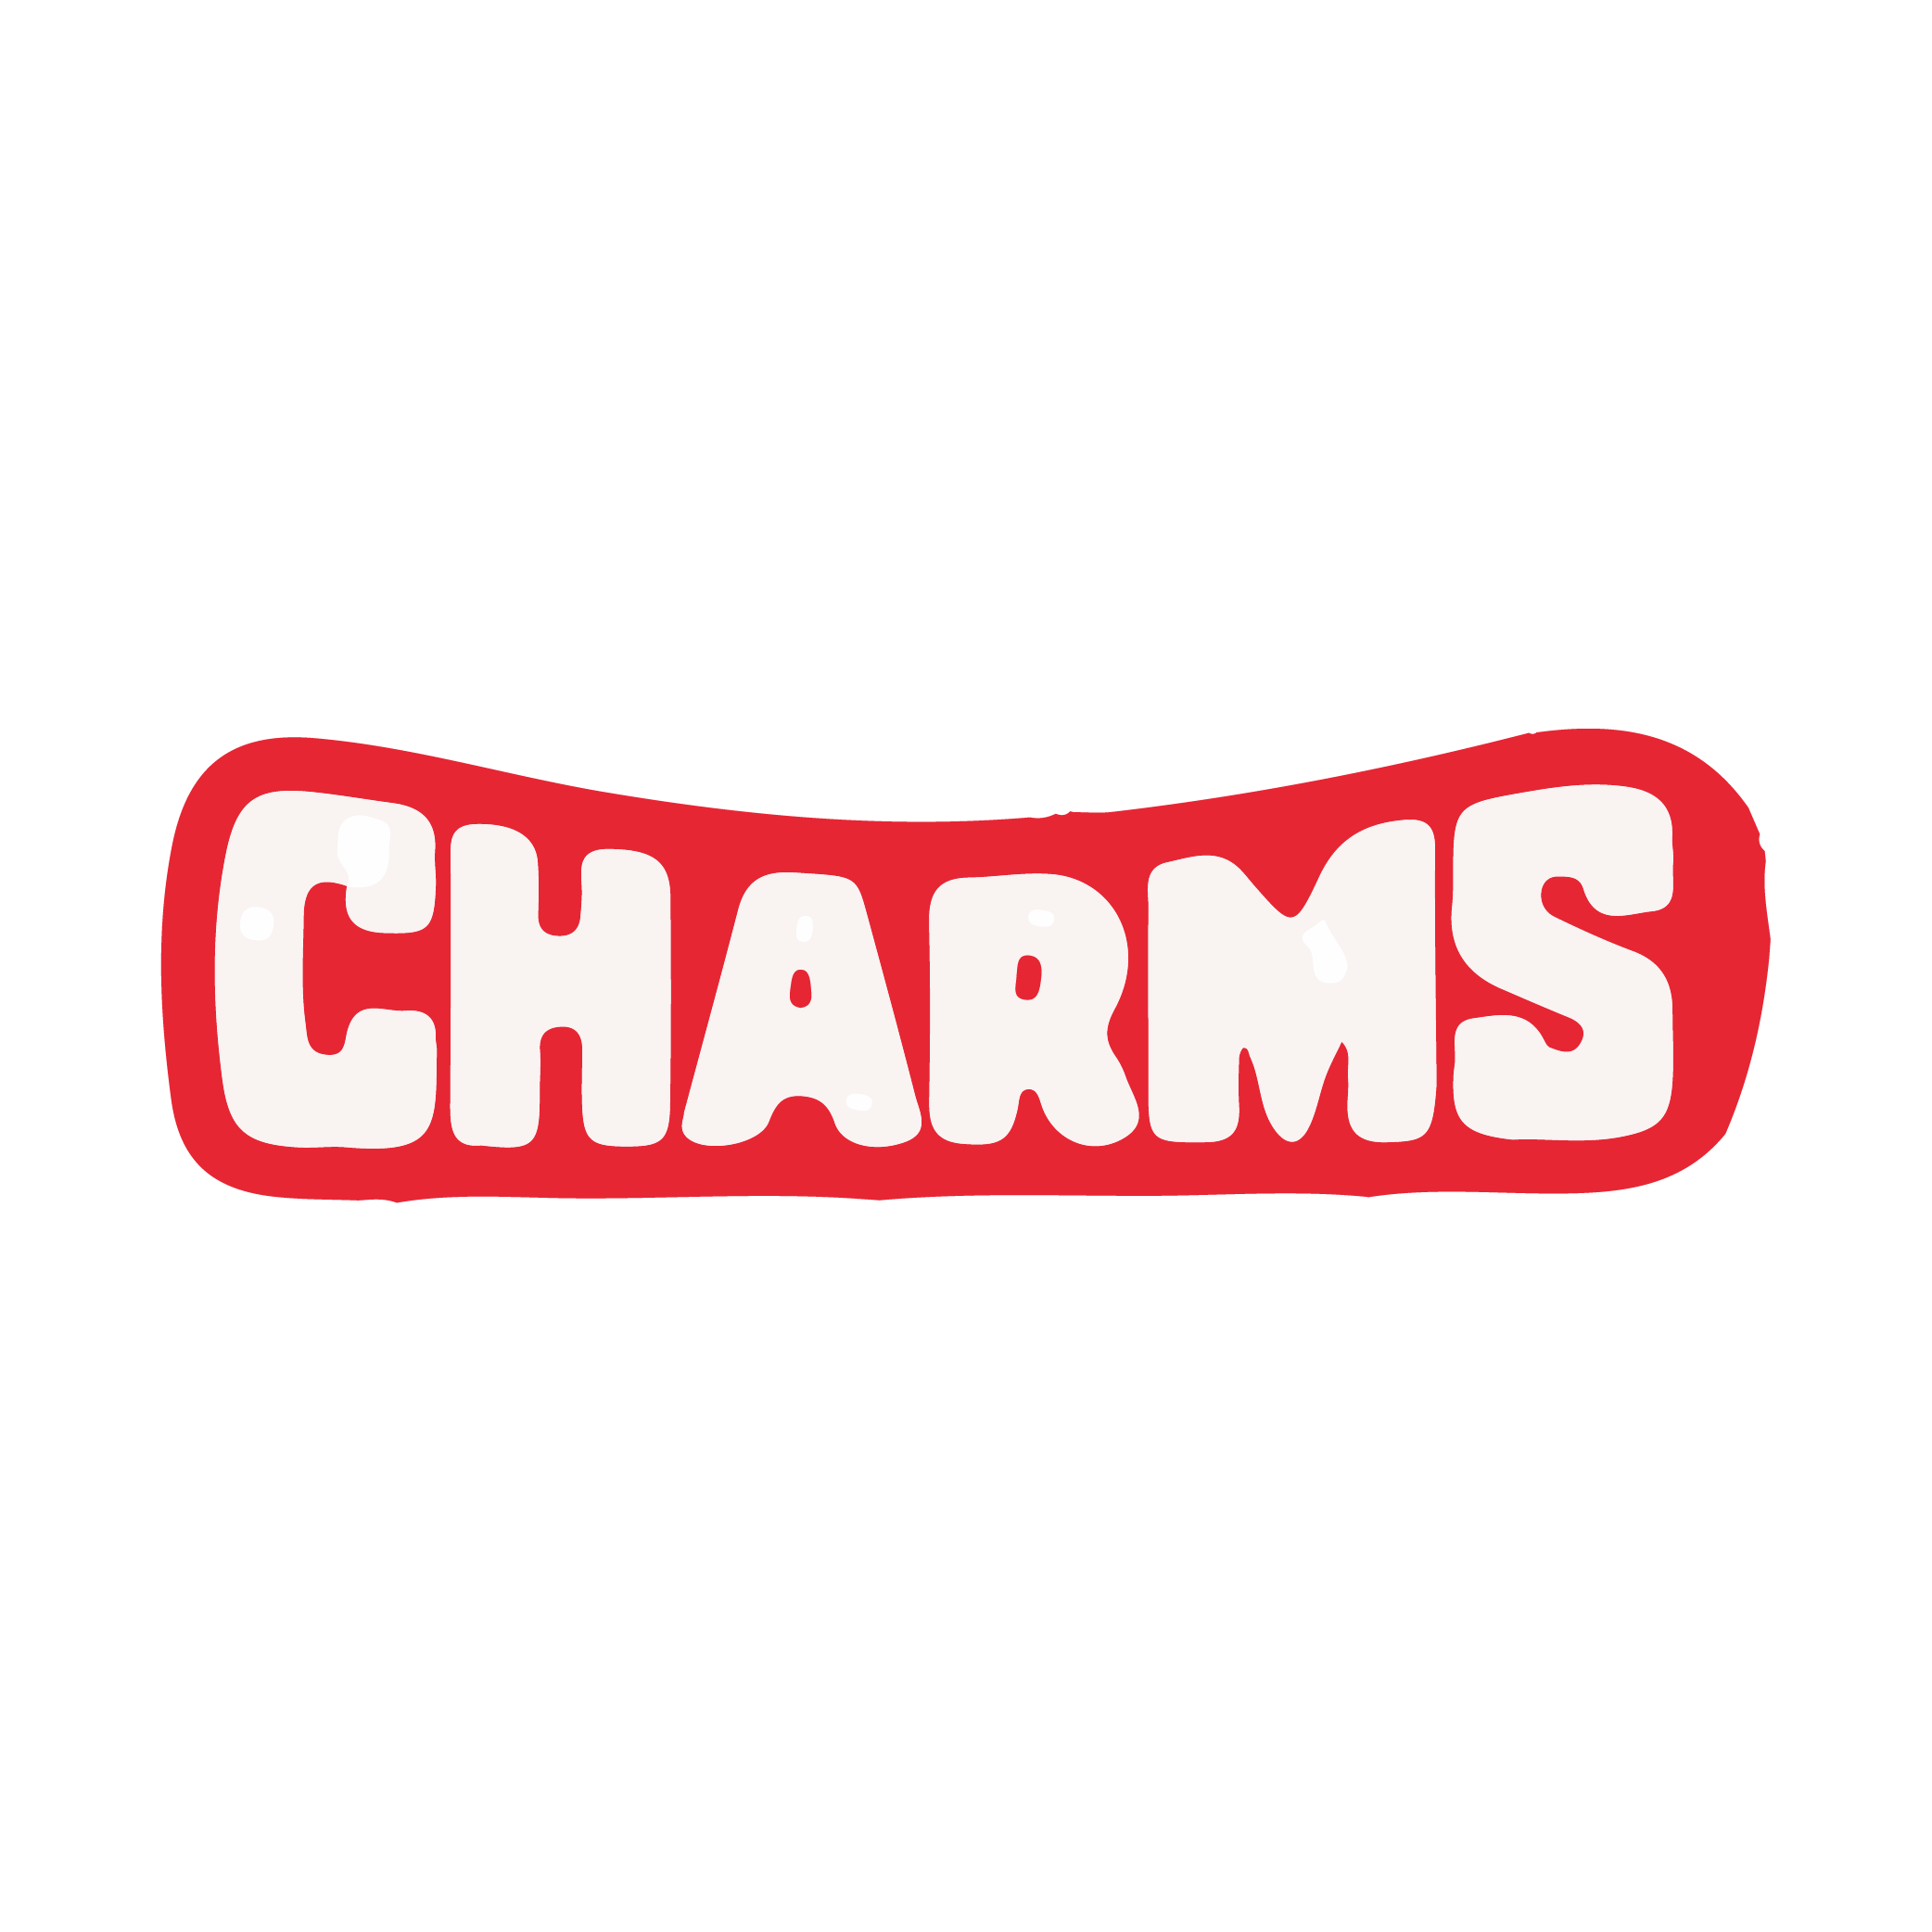 CHARMS